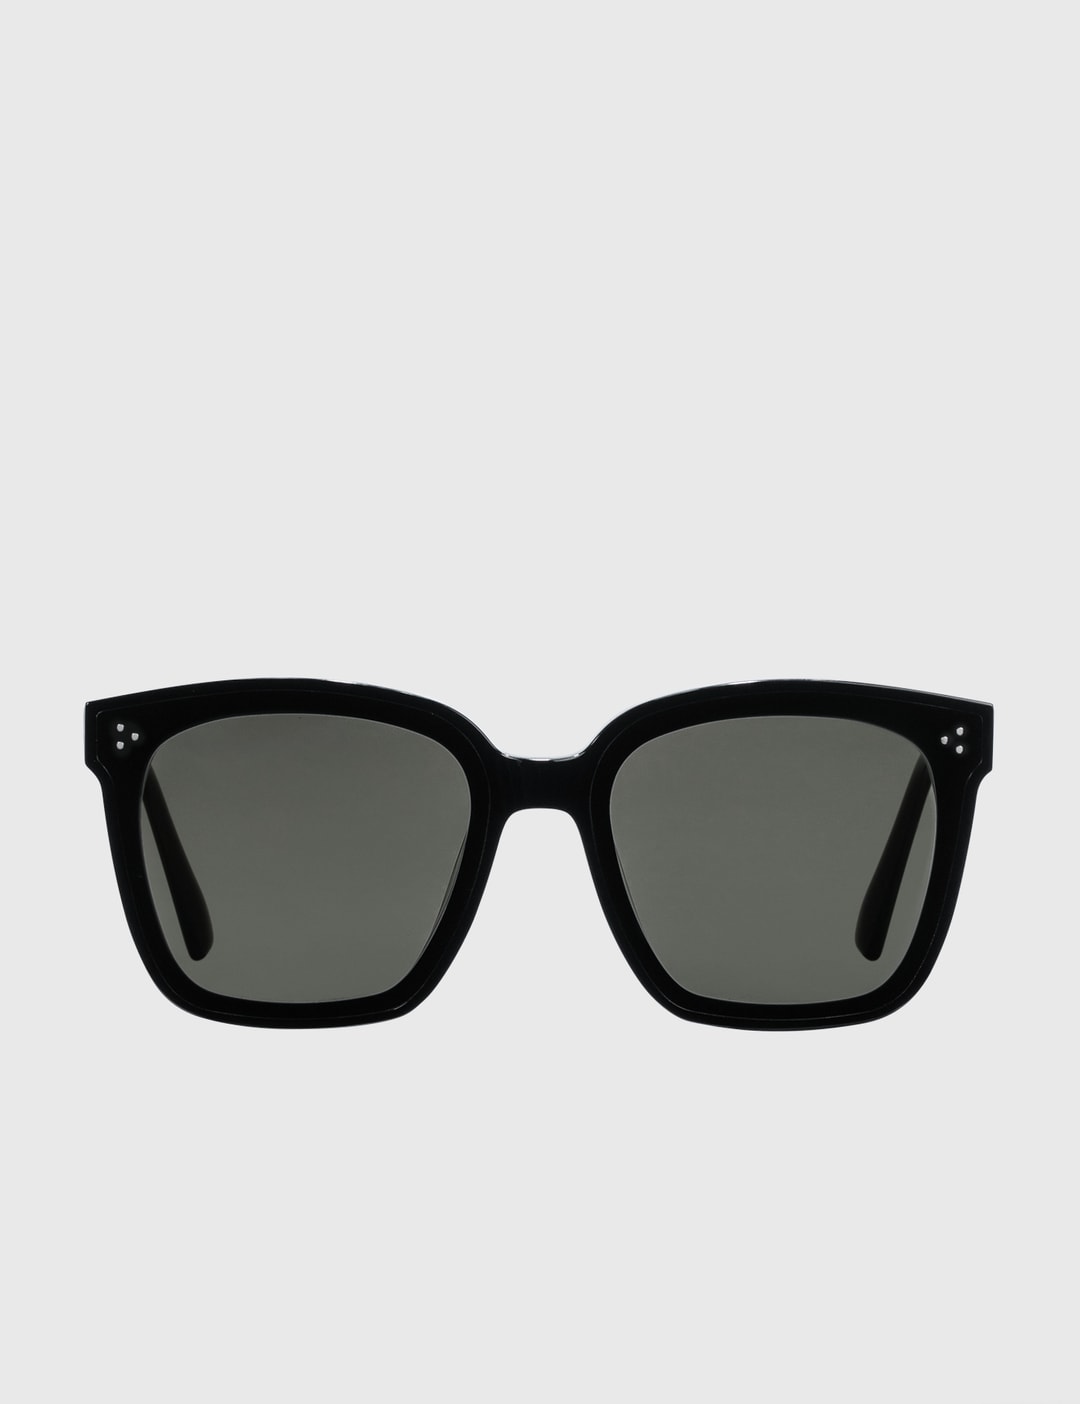 2021 NEW GENTLE MONSTER Authentic Sunglasses Fashion Eyewear DREAMER 17 01